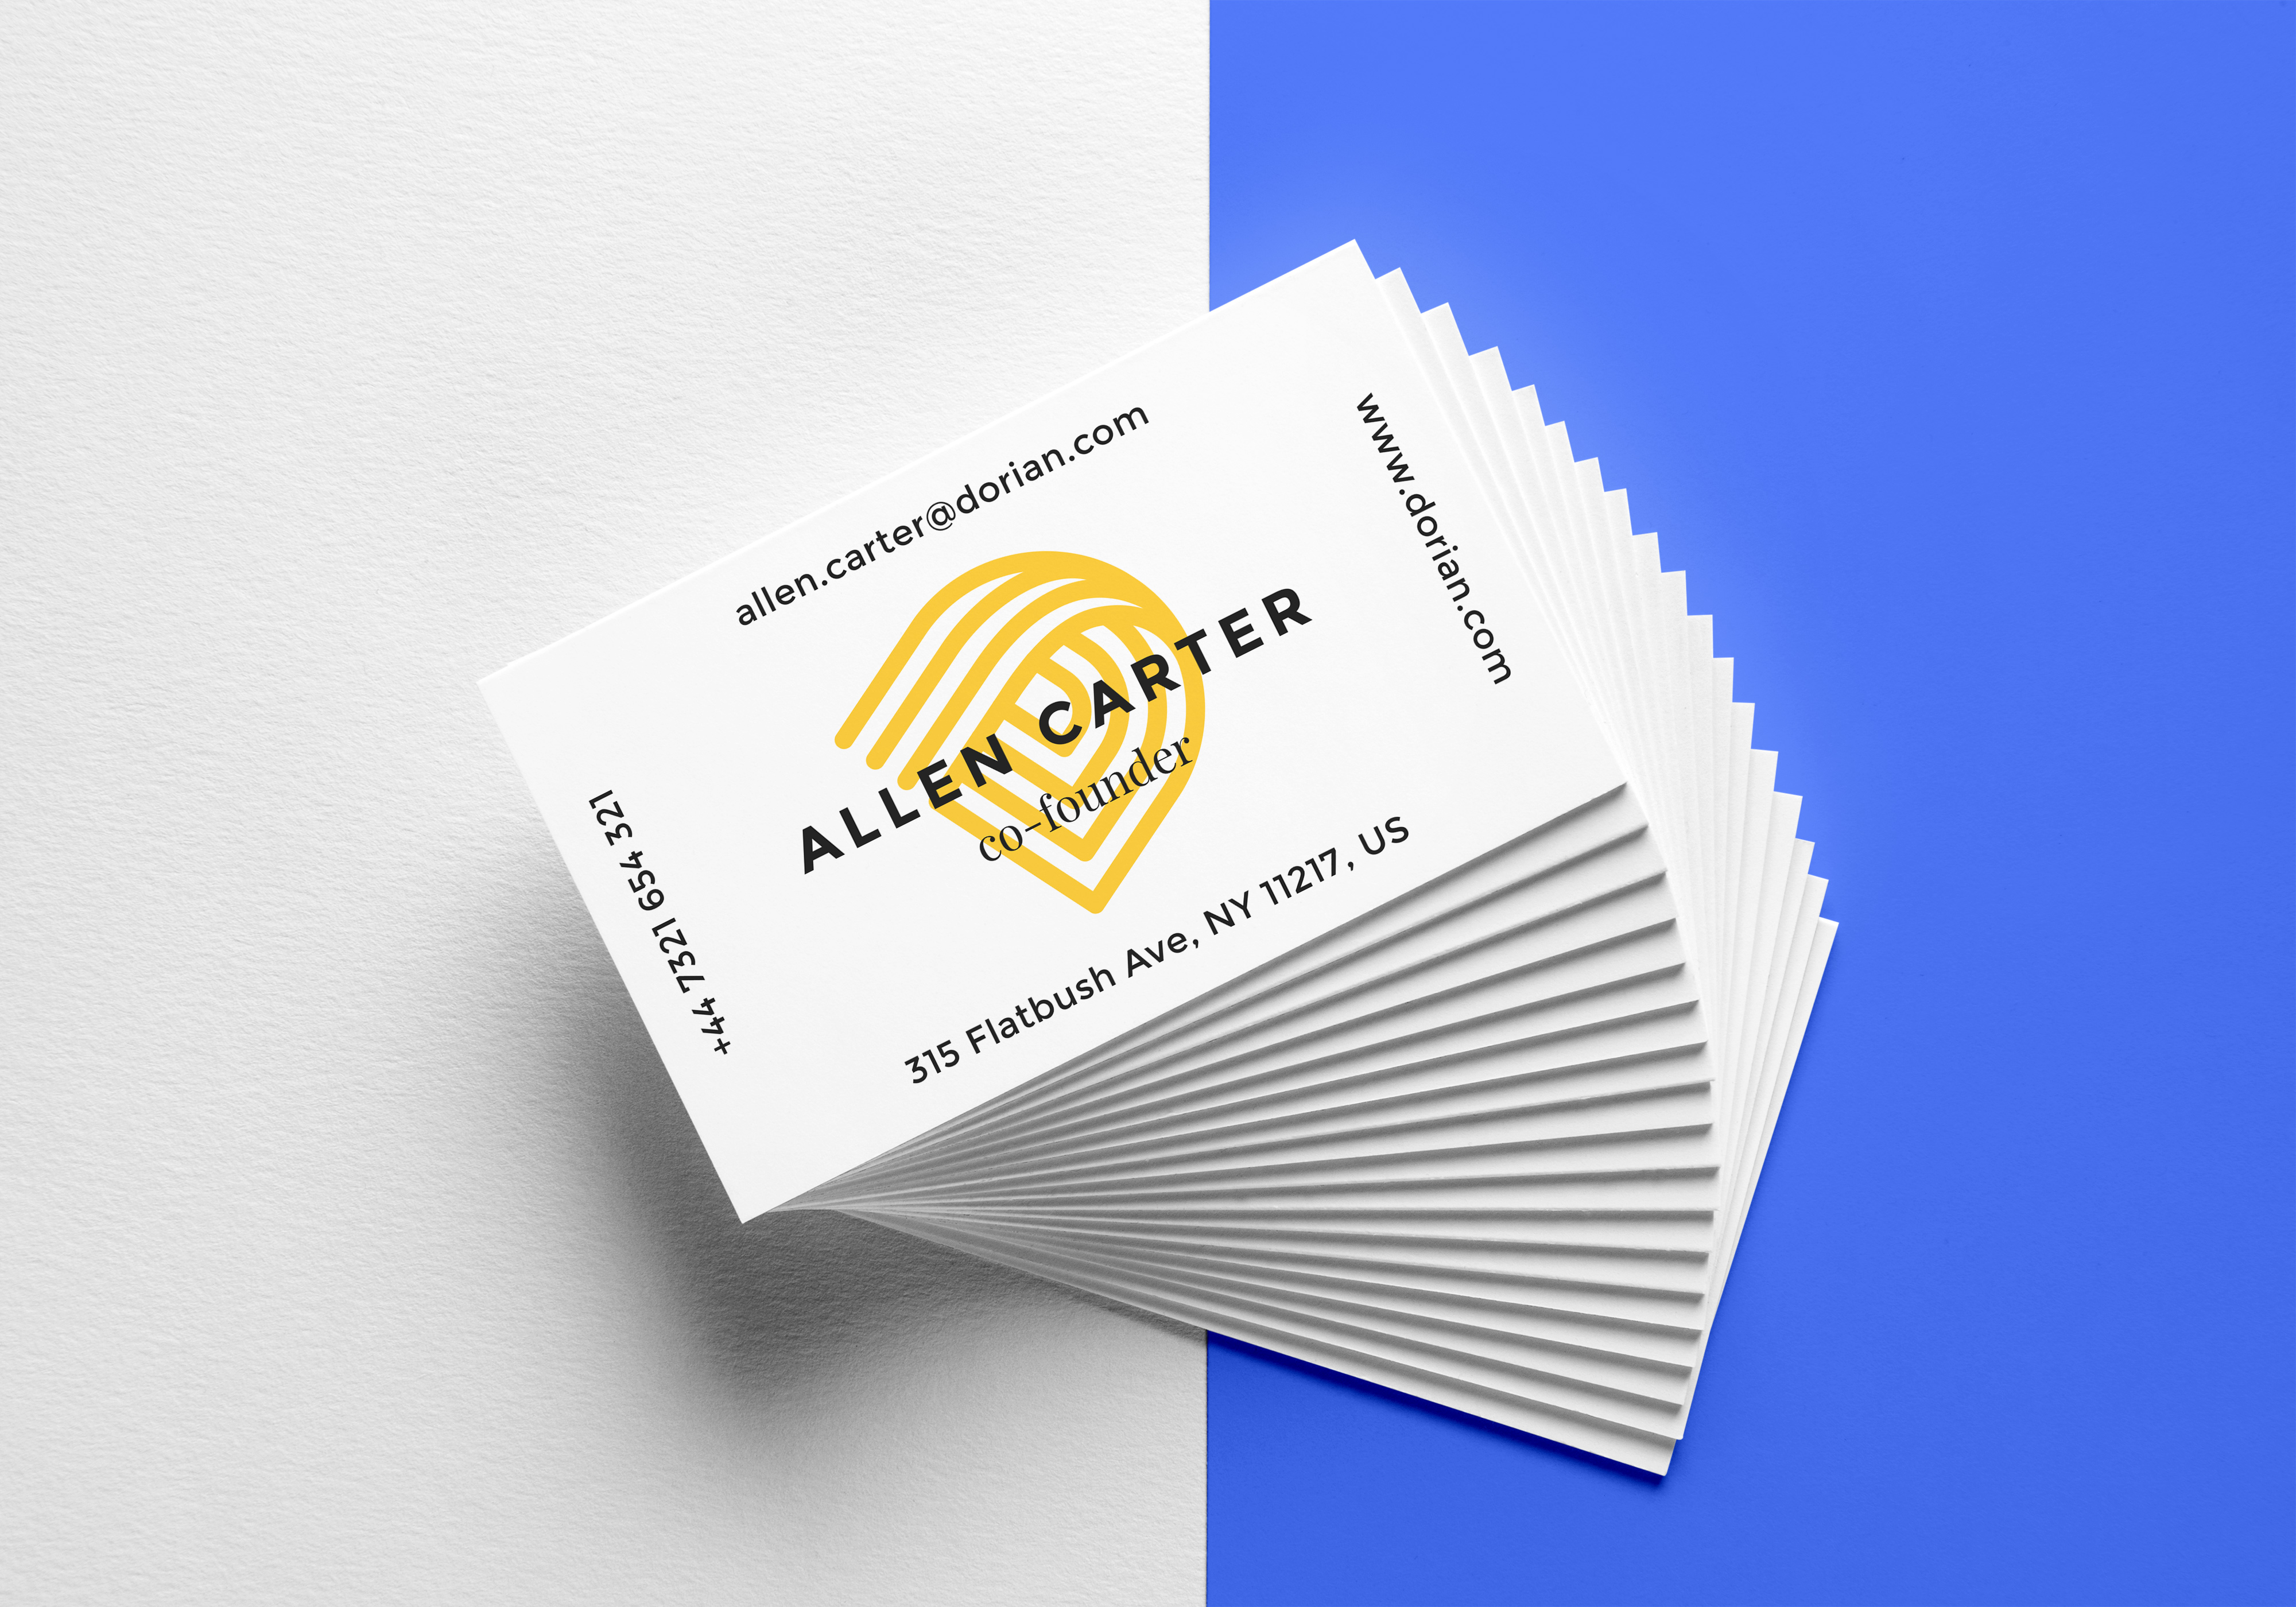 Download Free Realistic Business Card MockUp - Responsive Joomla ...